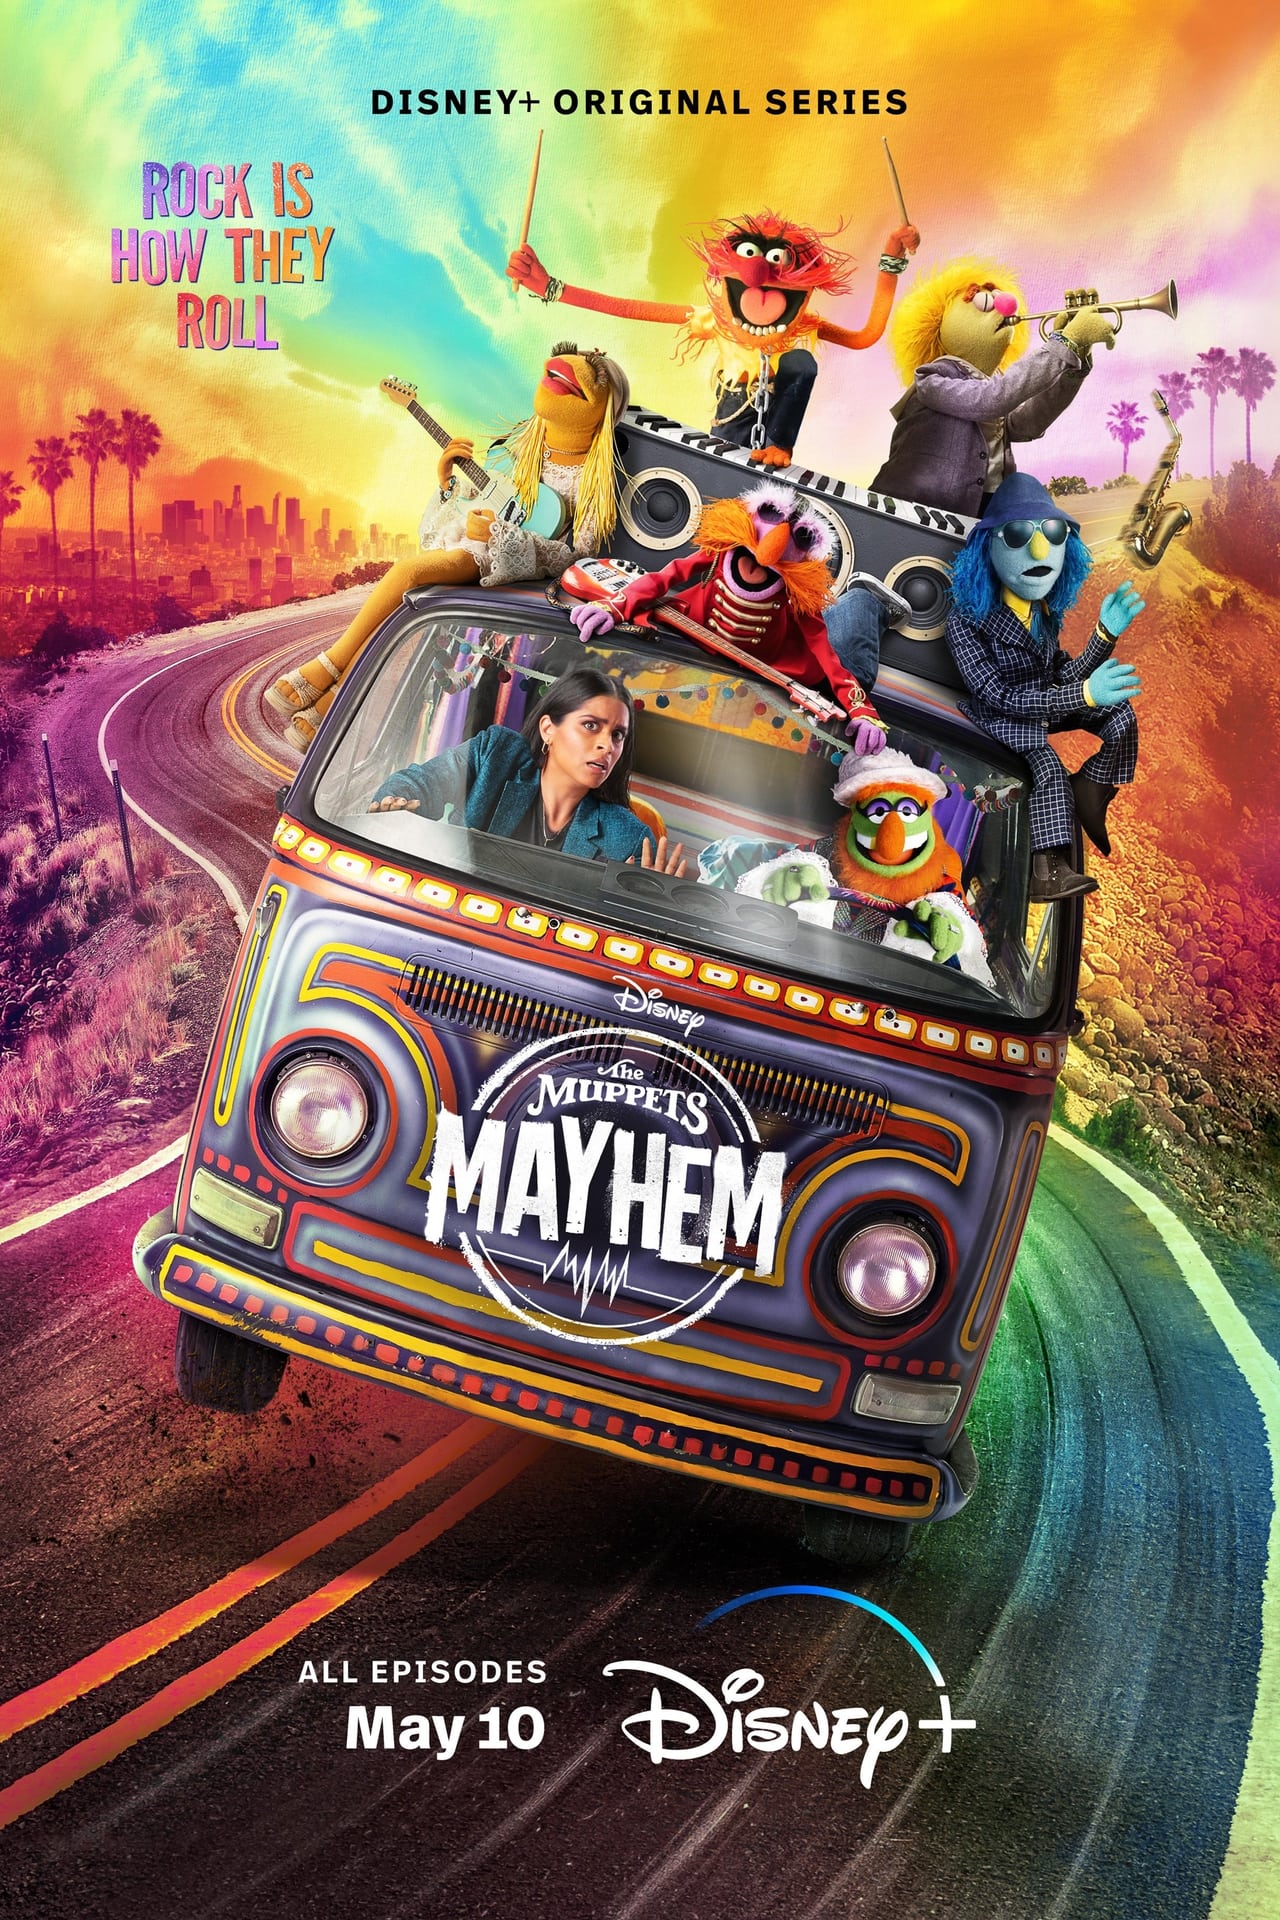 The Muppets Mayhem (2023) S1 EP01&EP10 256Kbps 23.976Fps 48Khz 5.1Ch Disney+ DD+ E-AC3 Turkish Audio TAC